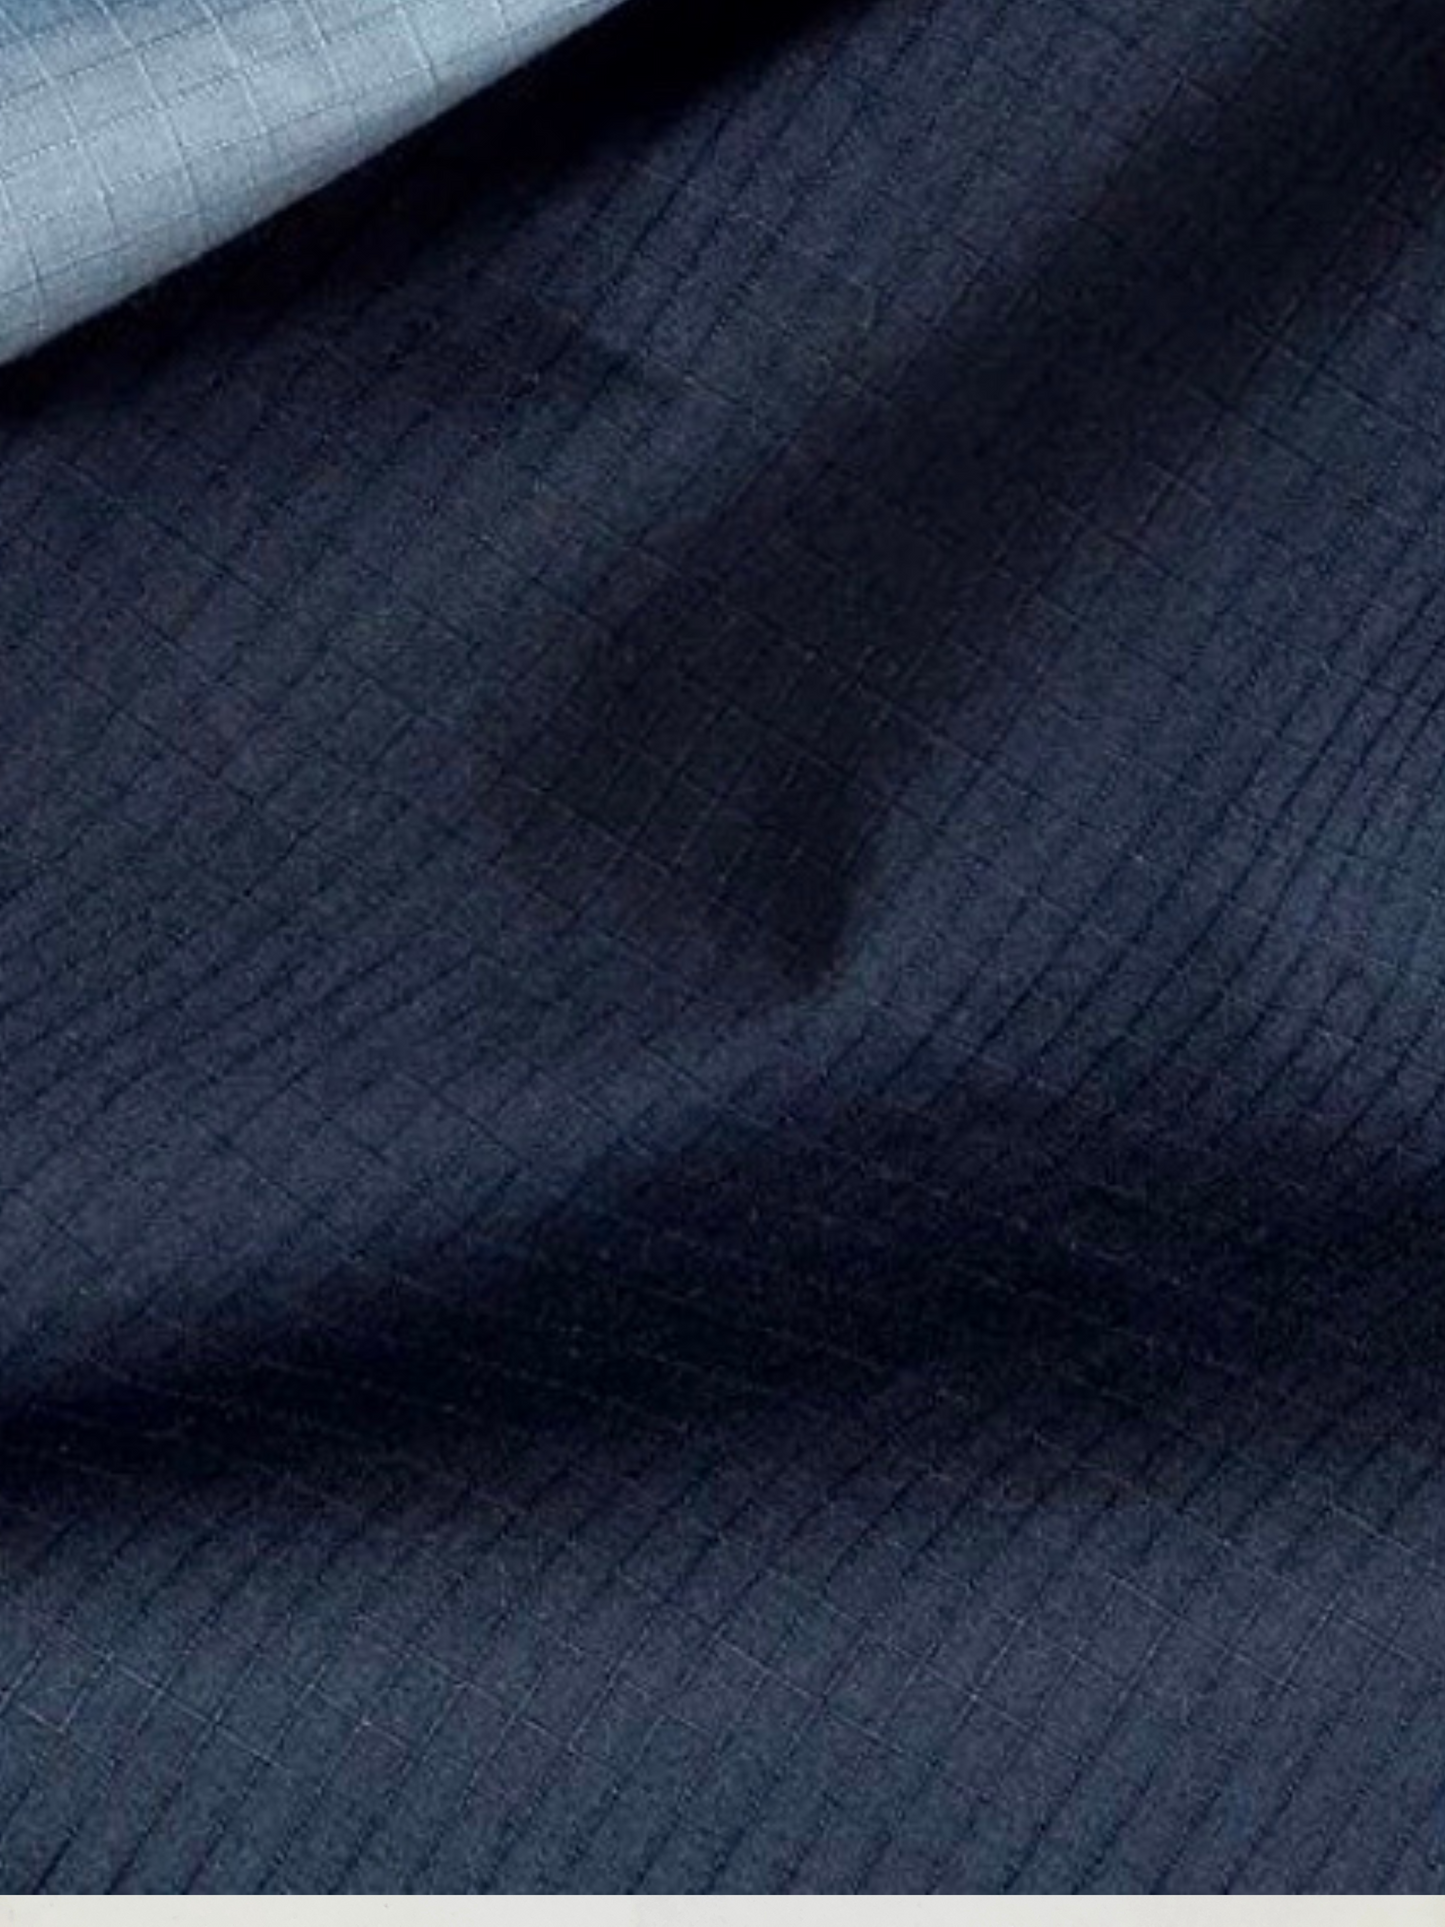 Fabric, British Millerain's Dry Wash BIC Cotton, Black or Light Blue